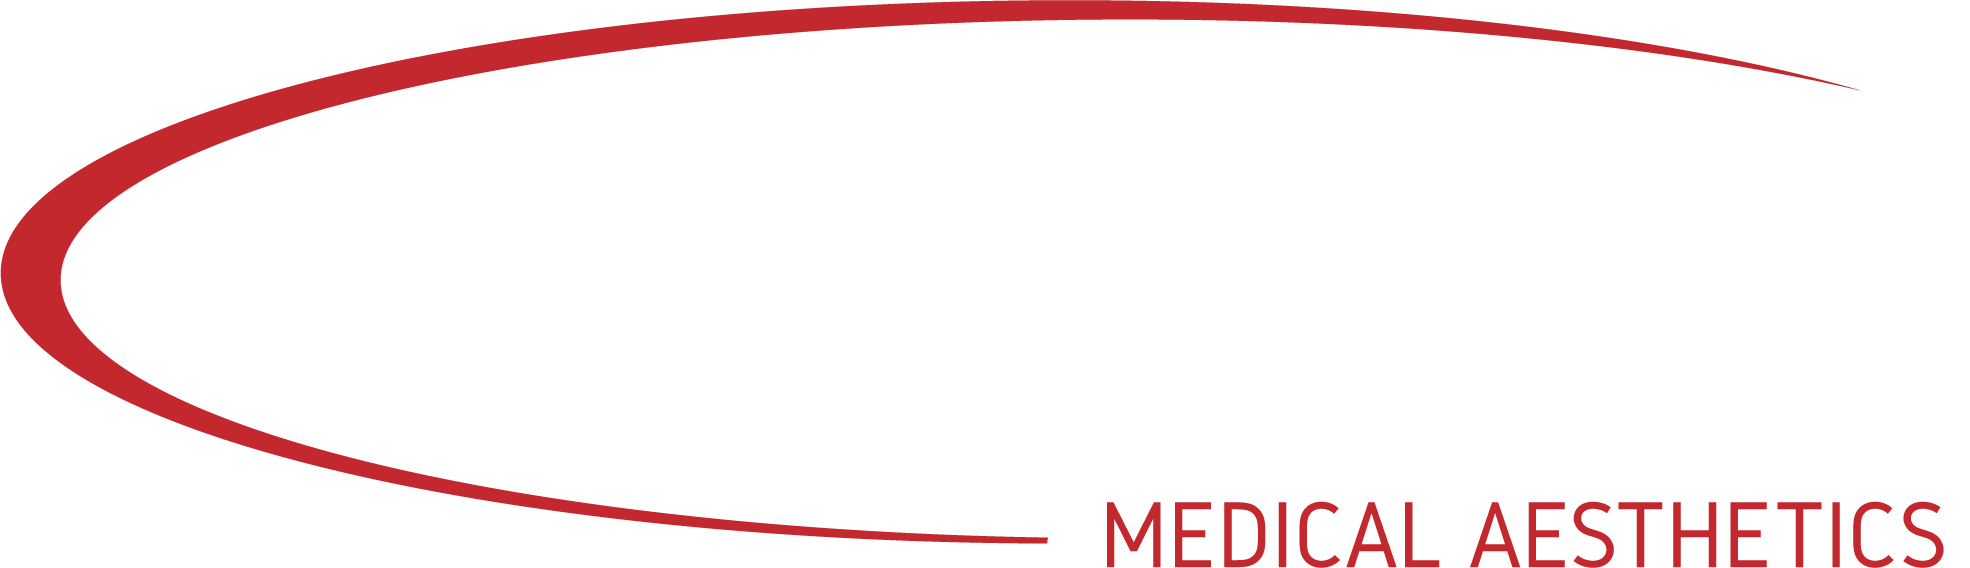 anti_aging_art-logo-inverted